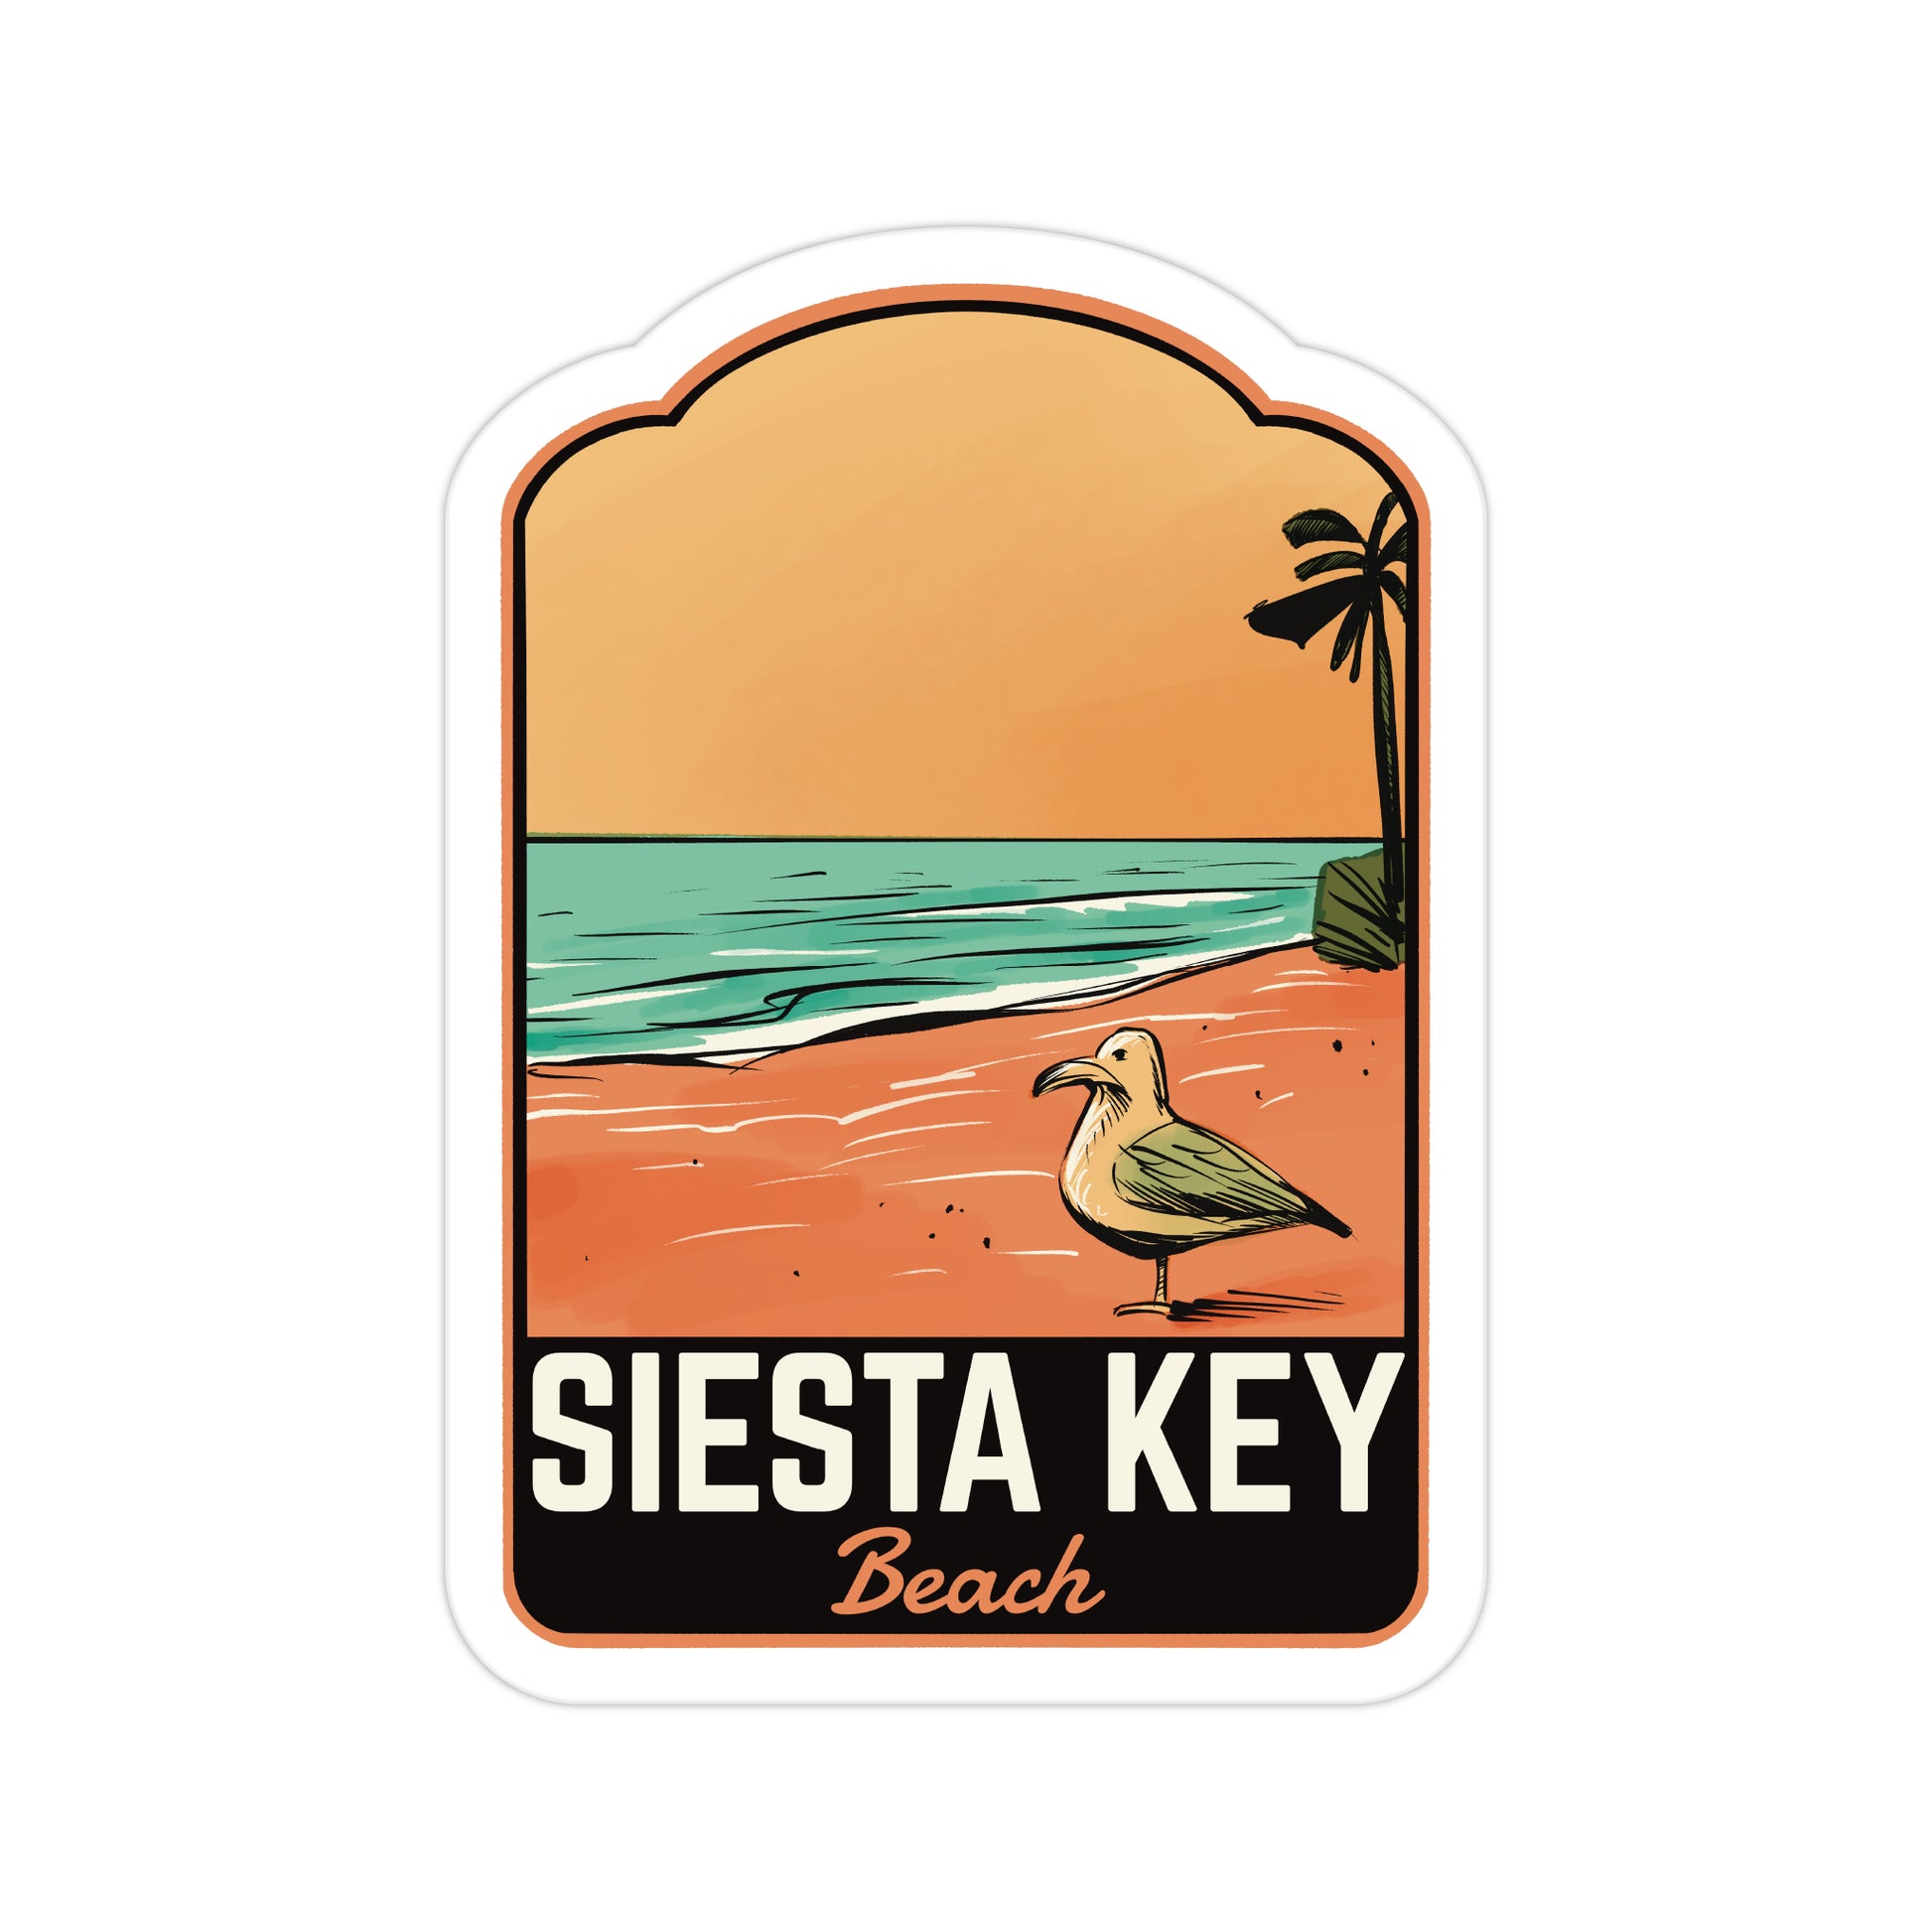 A sticker of Siesta Key Beach